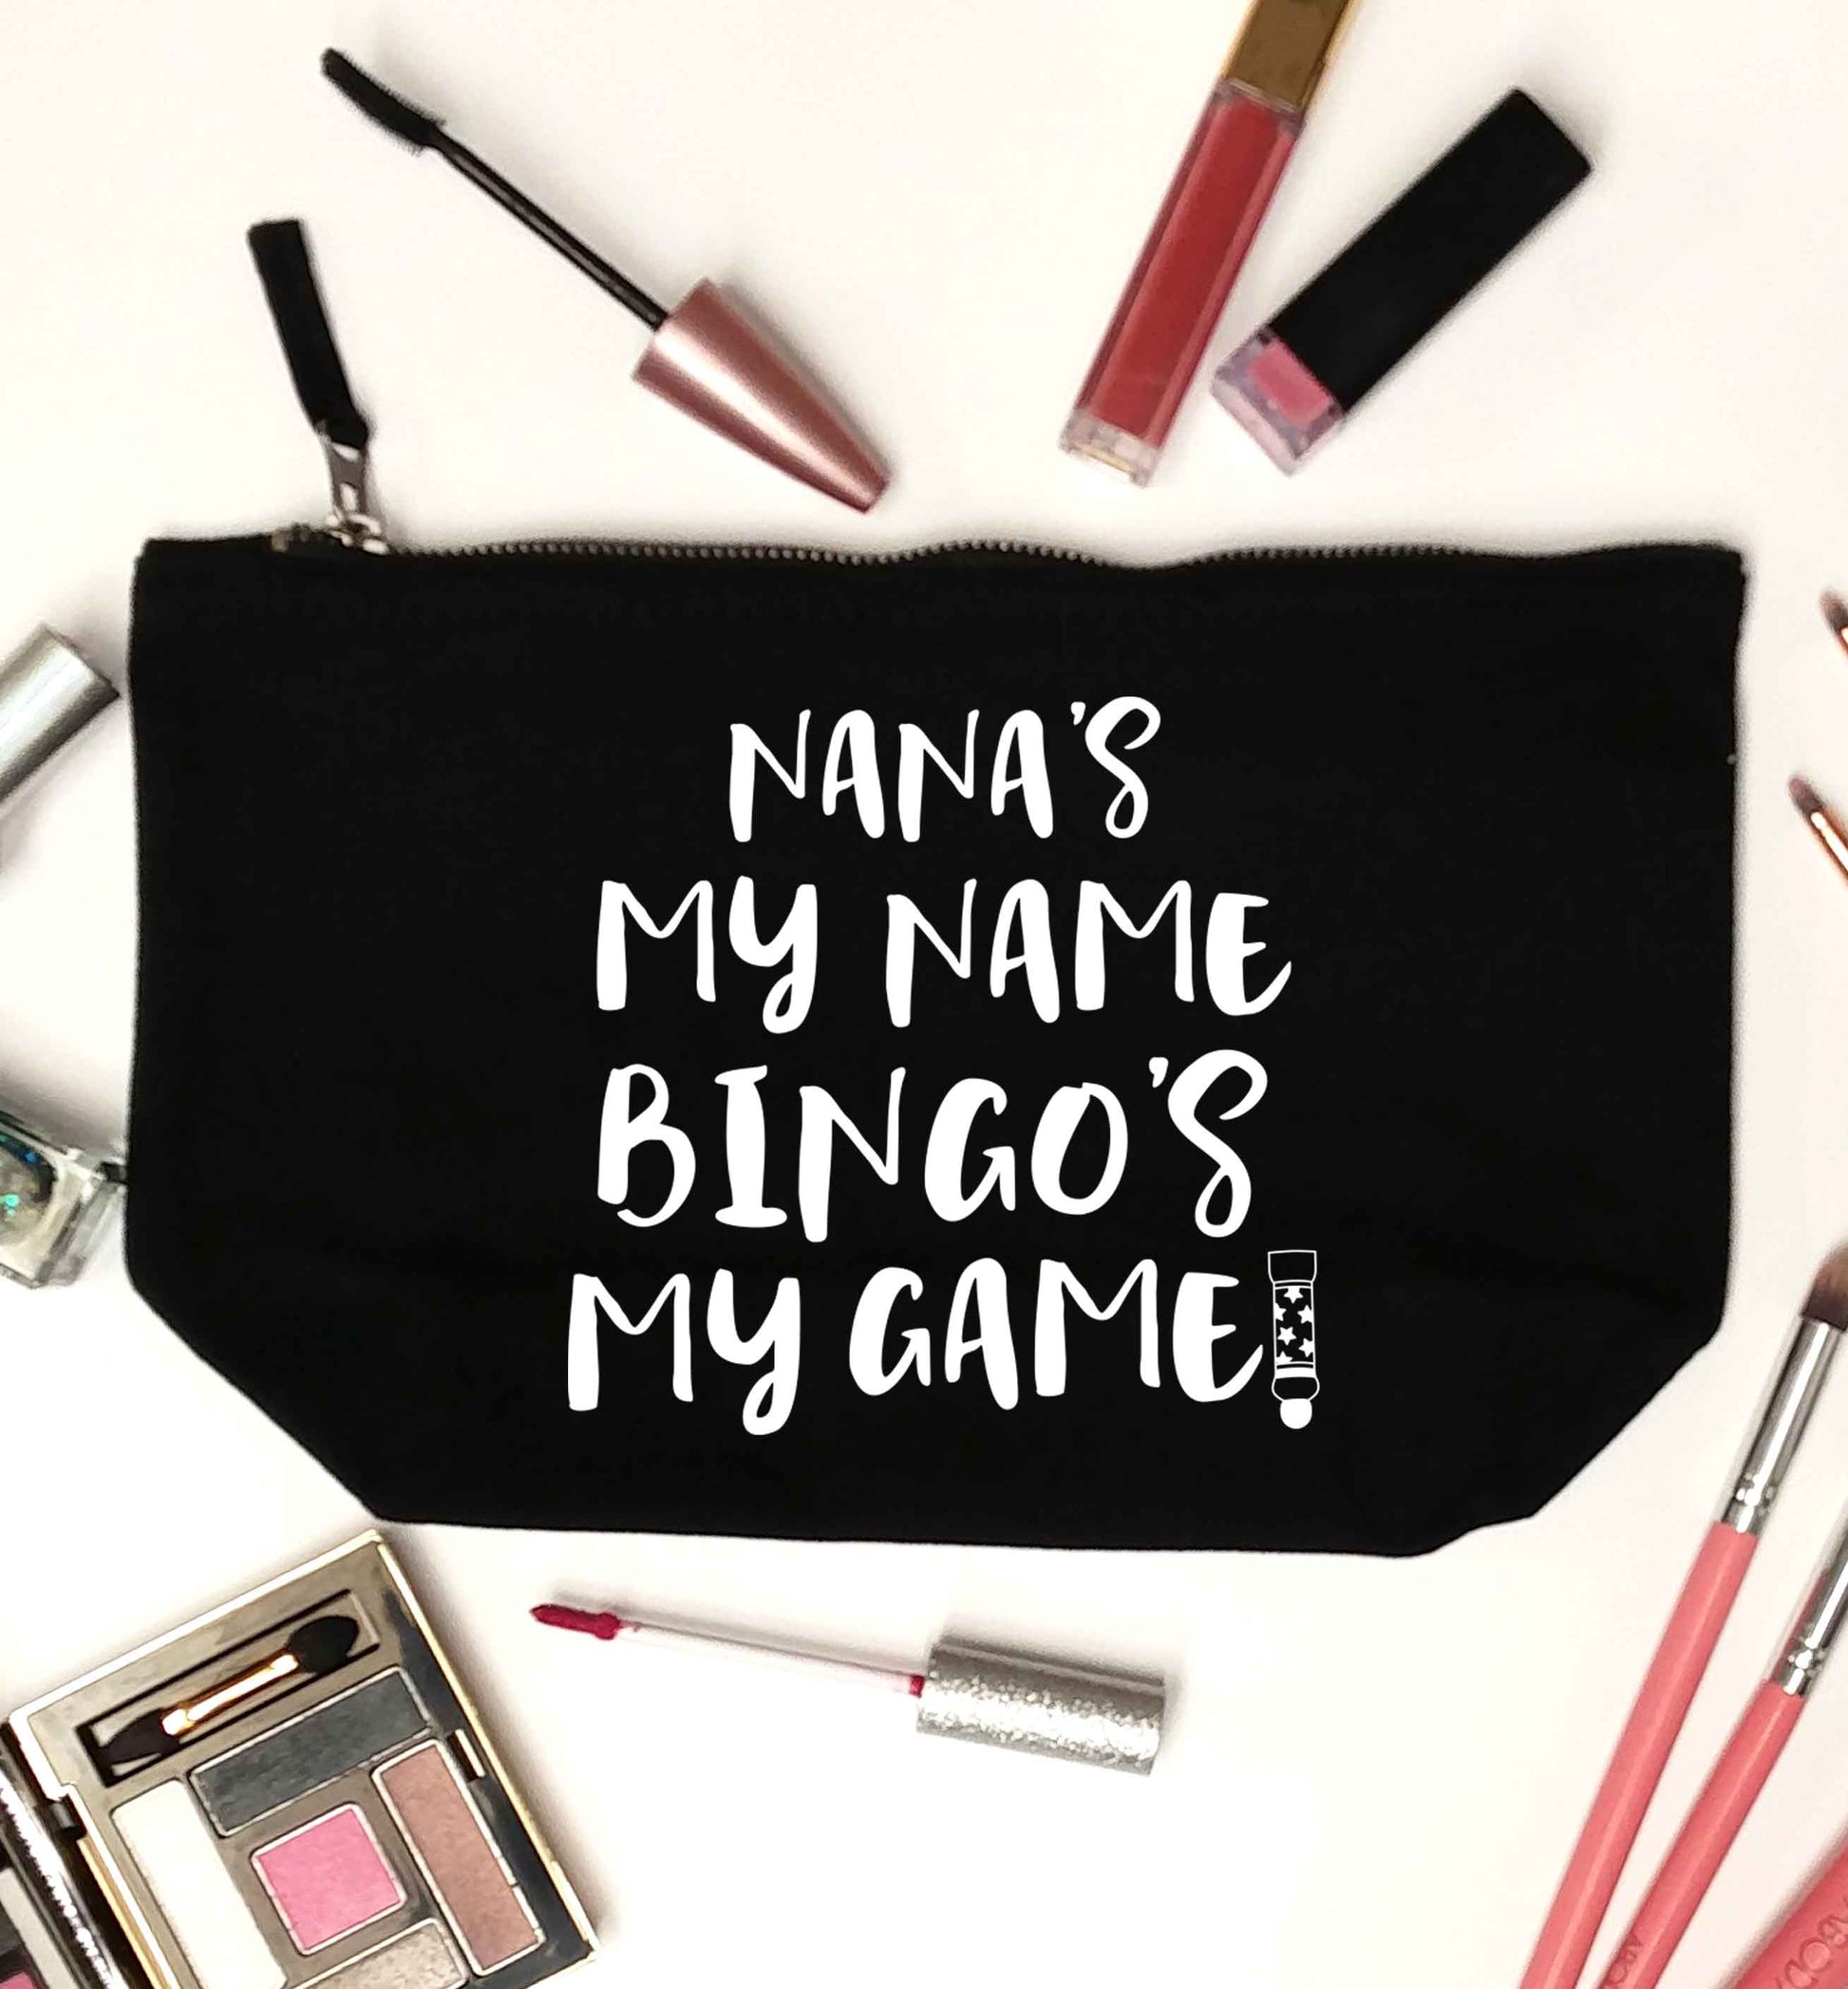 Nana's my name bingo's my game! black makeup bag